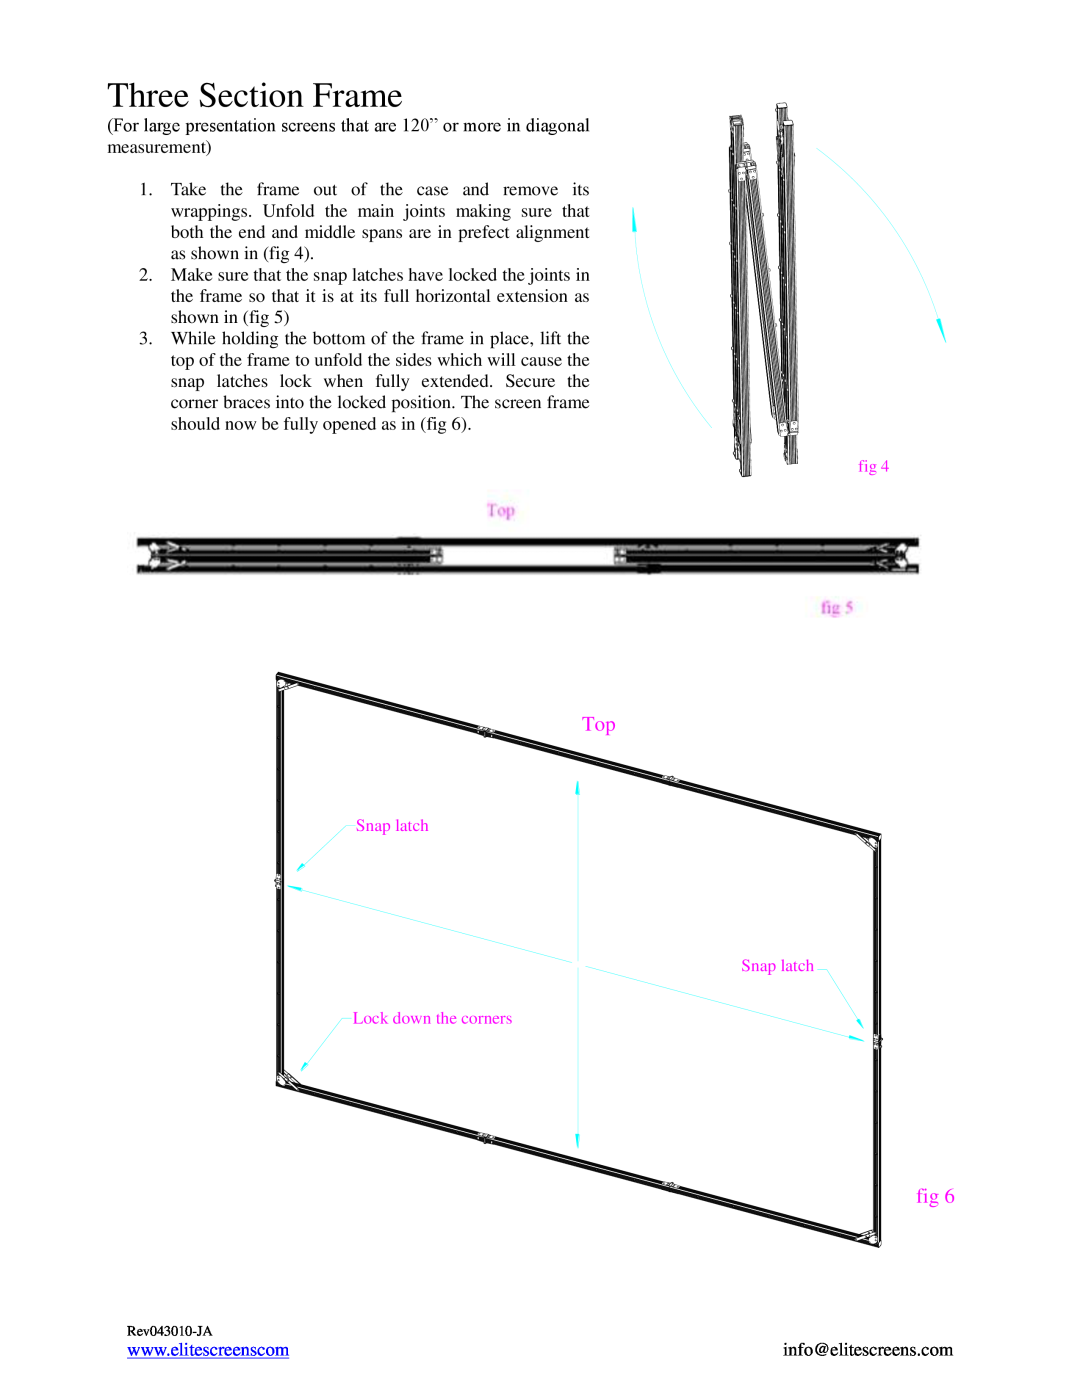 Elite Screens REV043010-JA manual Three Section Frame 